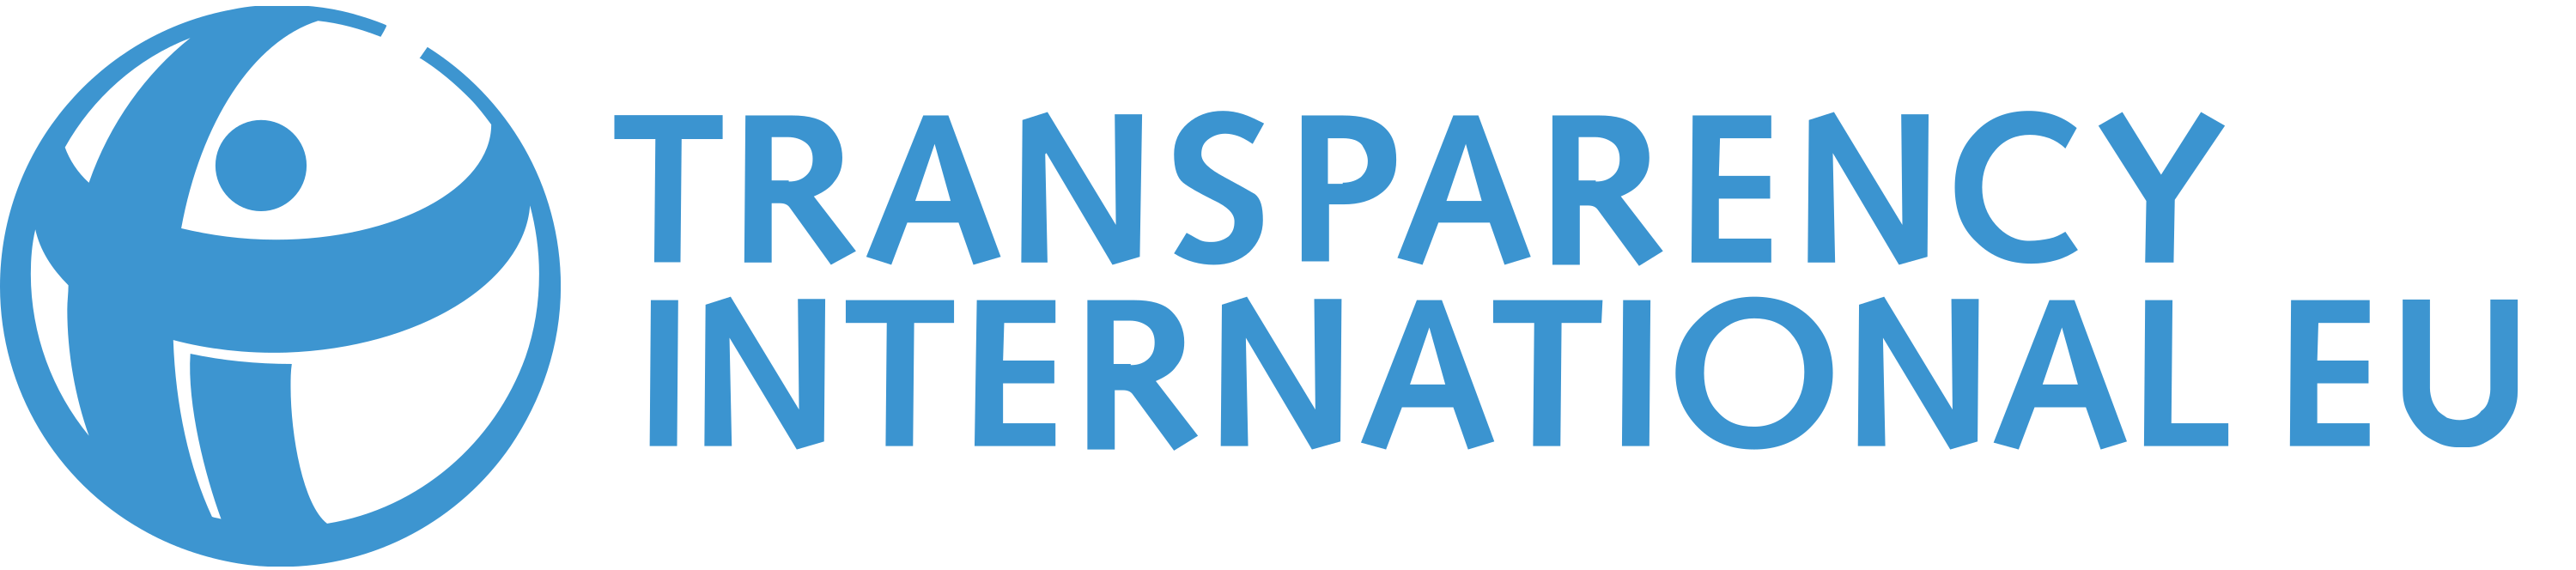 Transparency International Europe